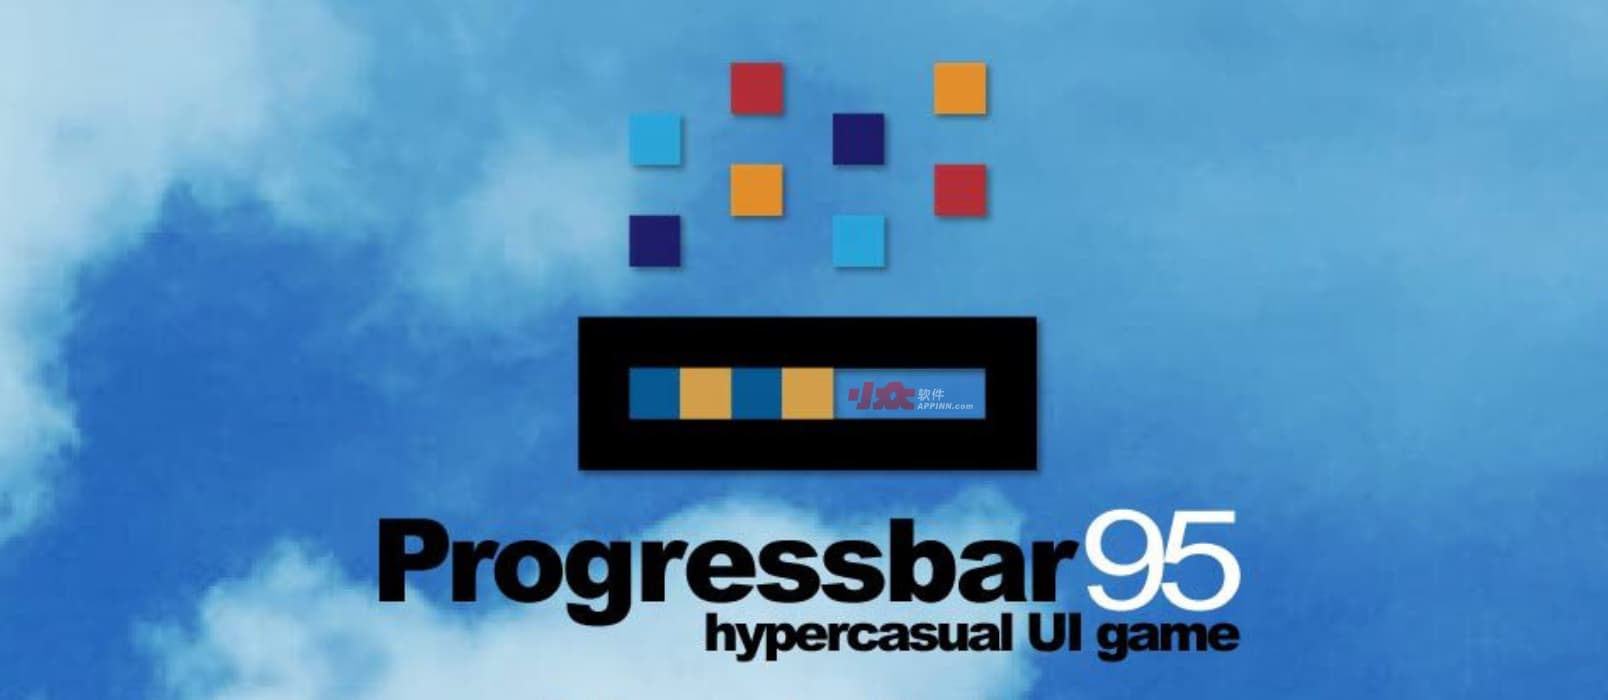 Progressbar95 - 模拟旧操作系统，一路打怪升级到最新操作系统，这居然是一款游戏？！